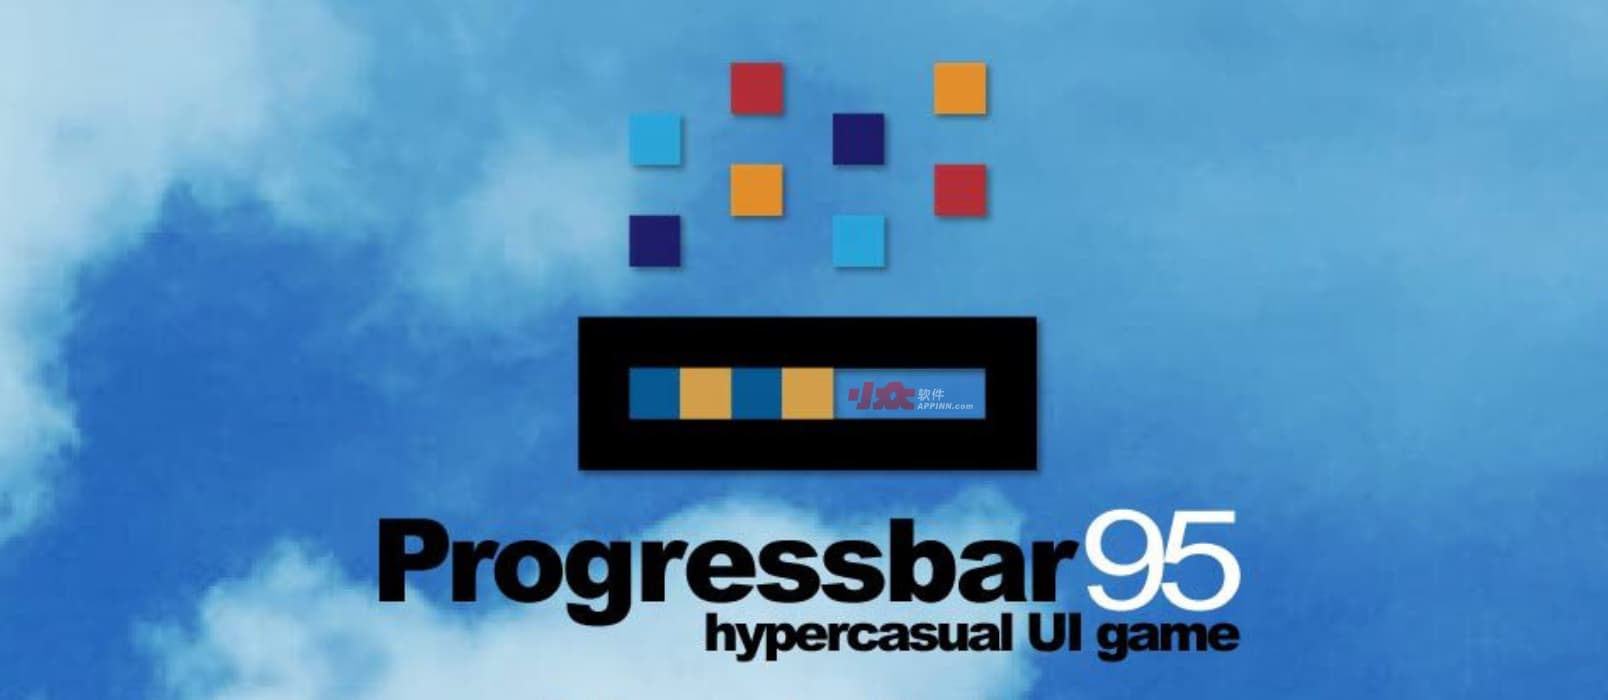 Progressbar95 - 模拟旧操作系统，一路打怪升级到最新操作系统，这居然是一款游戏？！